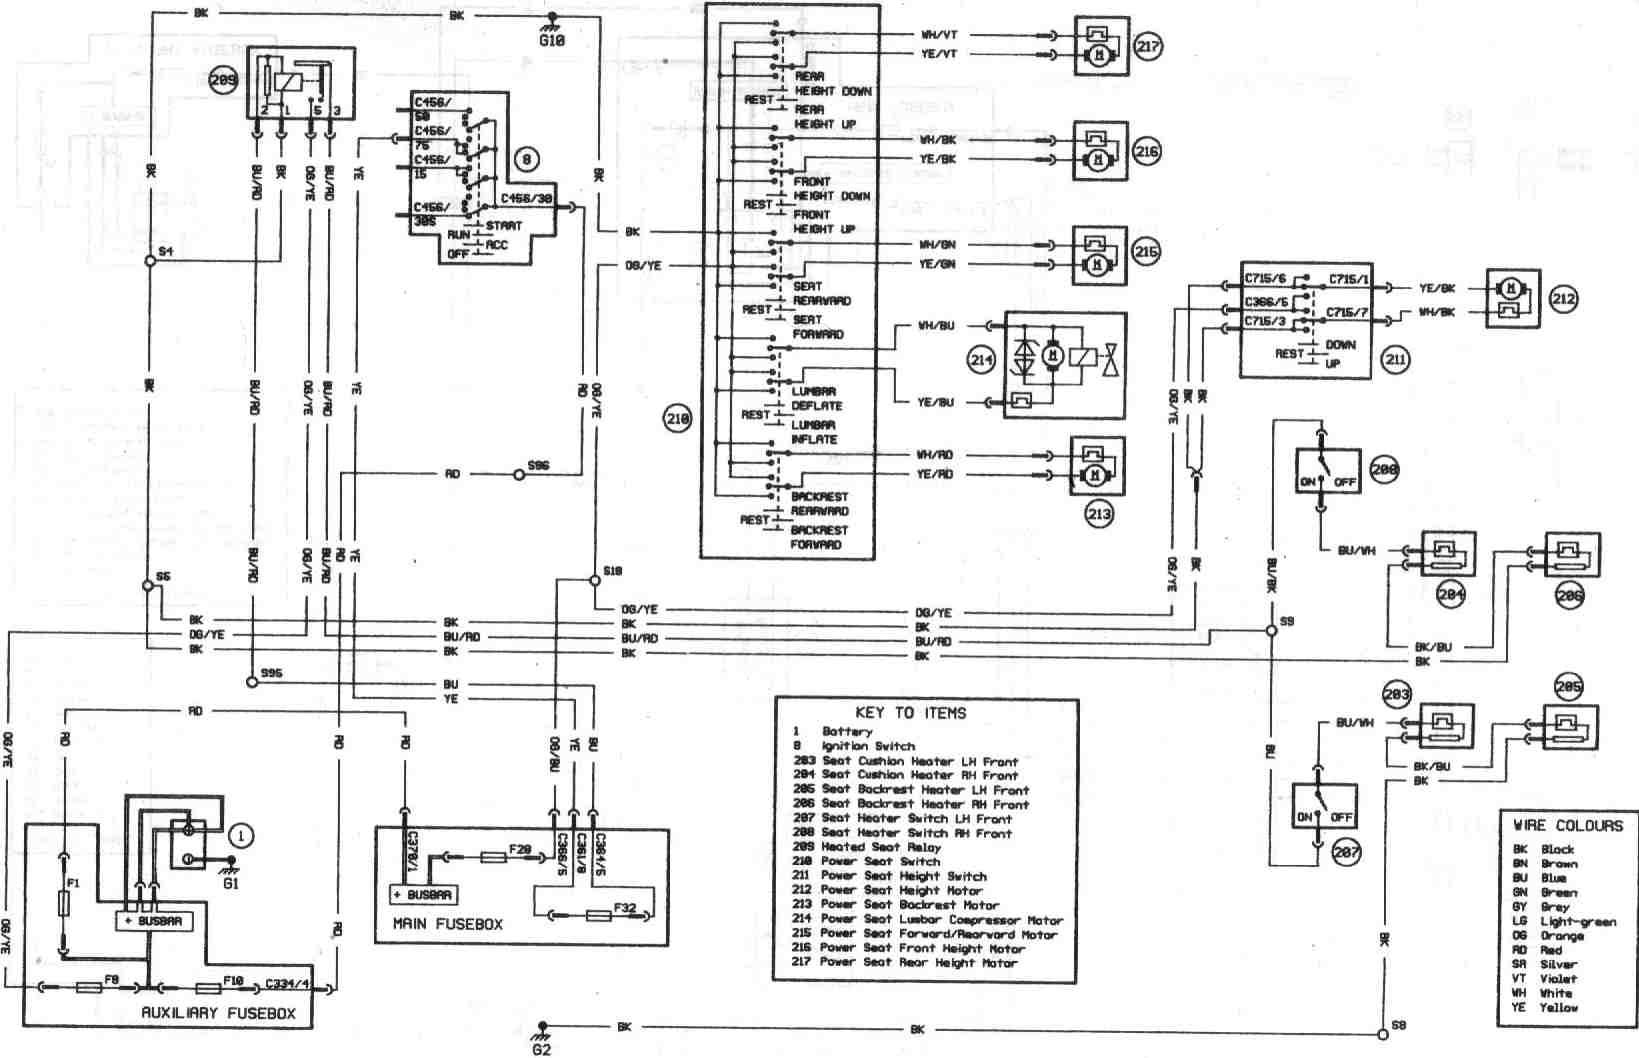 Ford mondeo radio wiring diagram #9